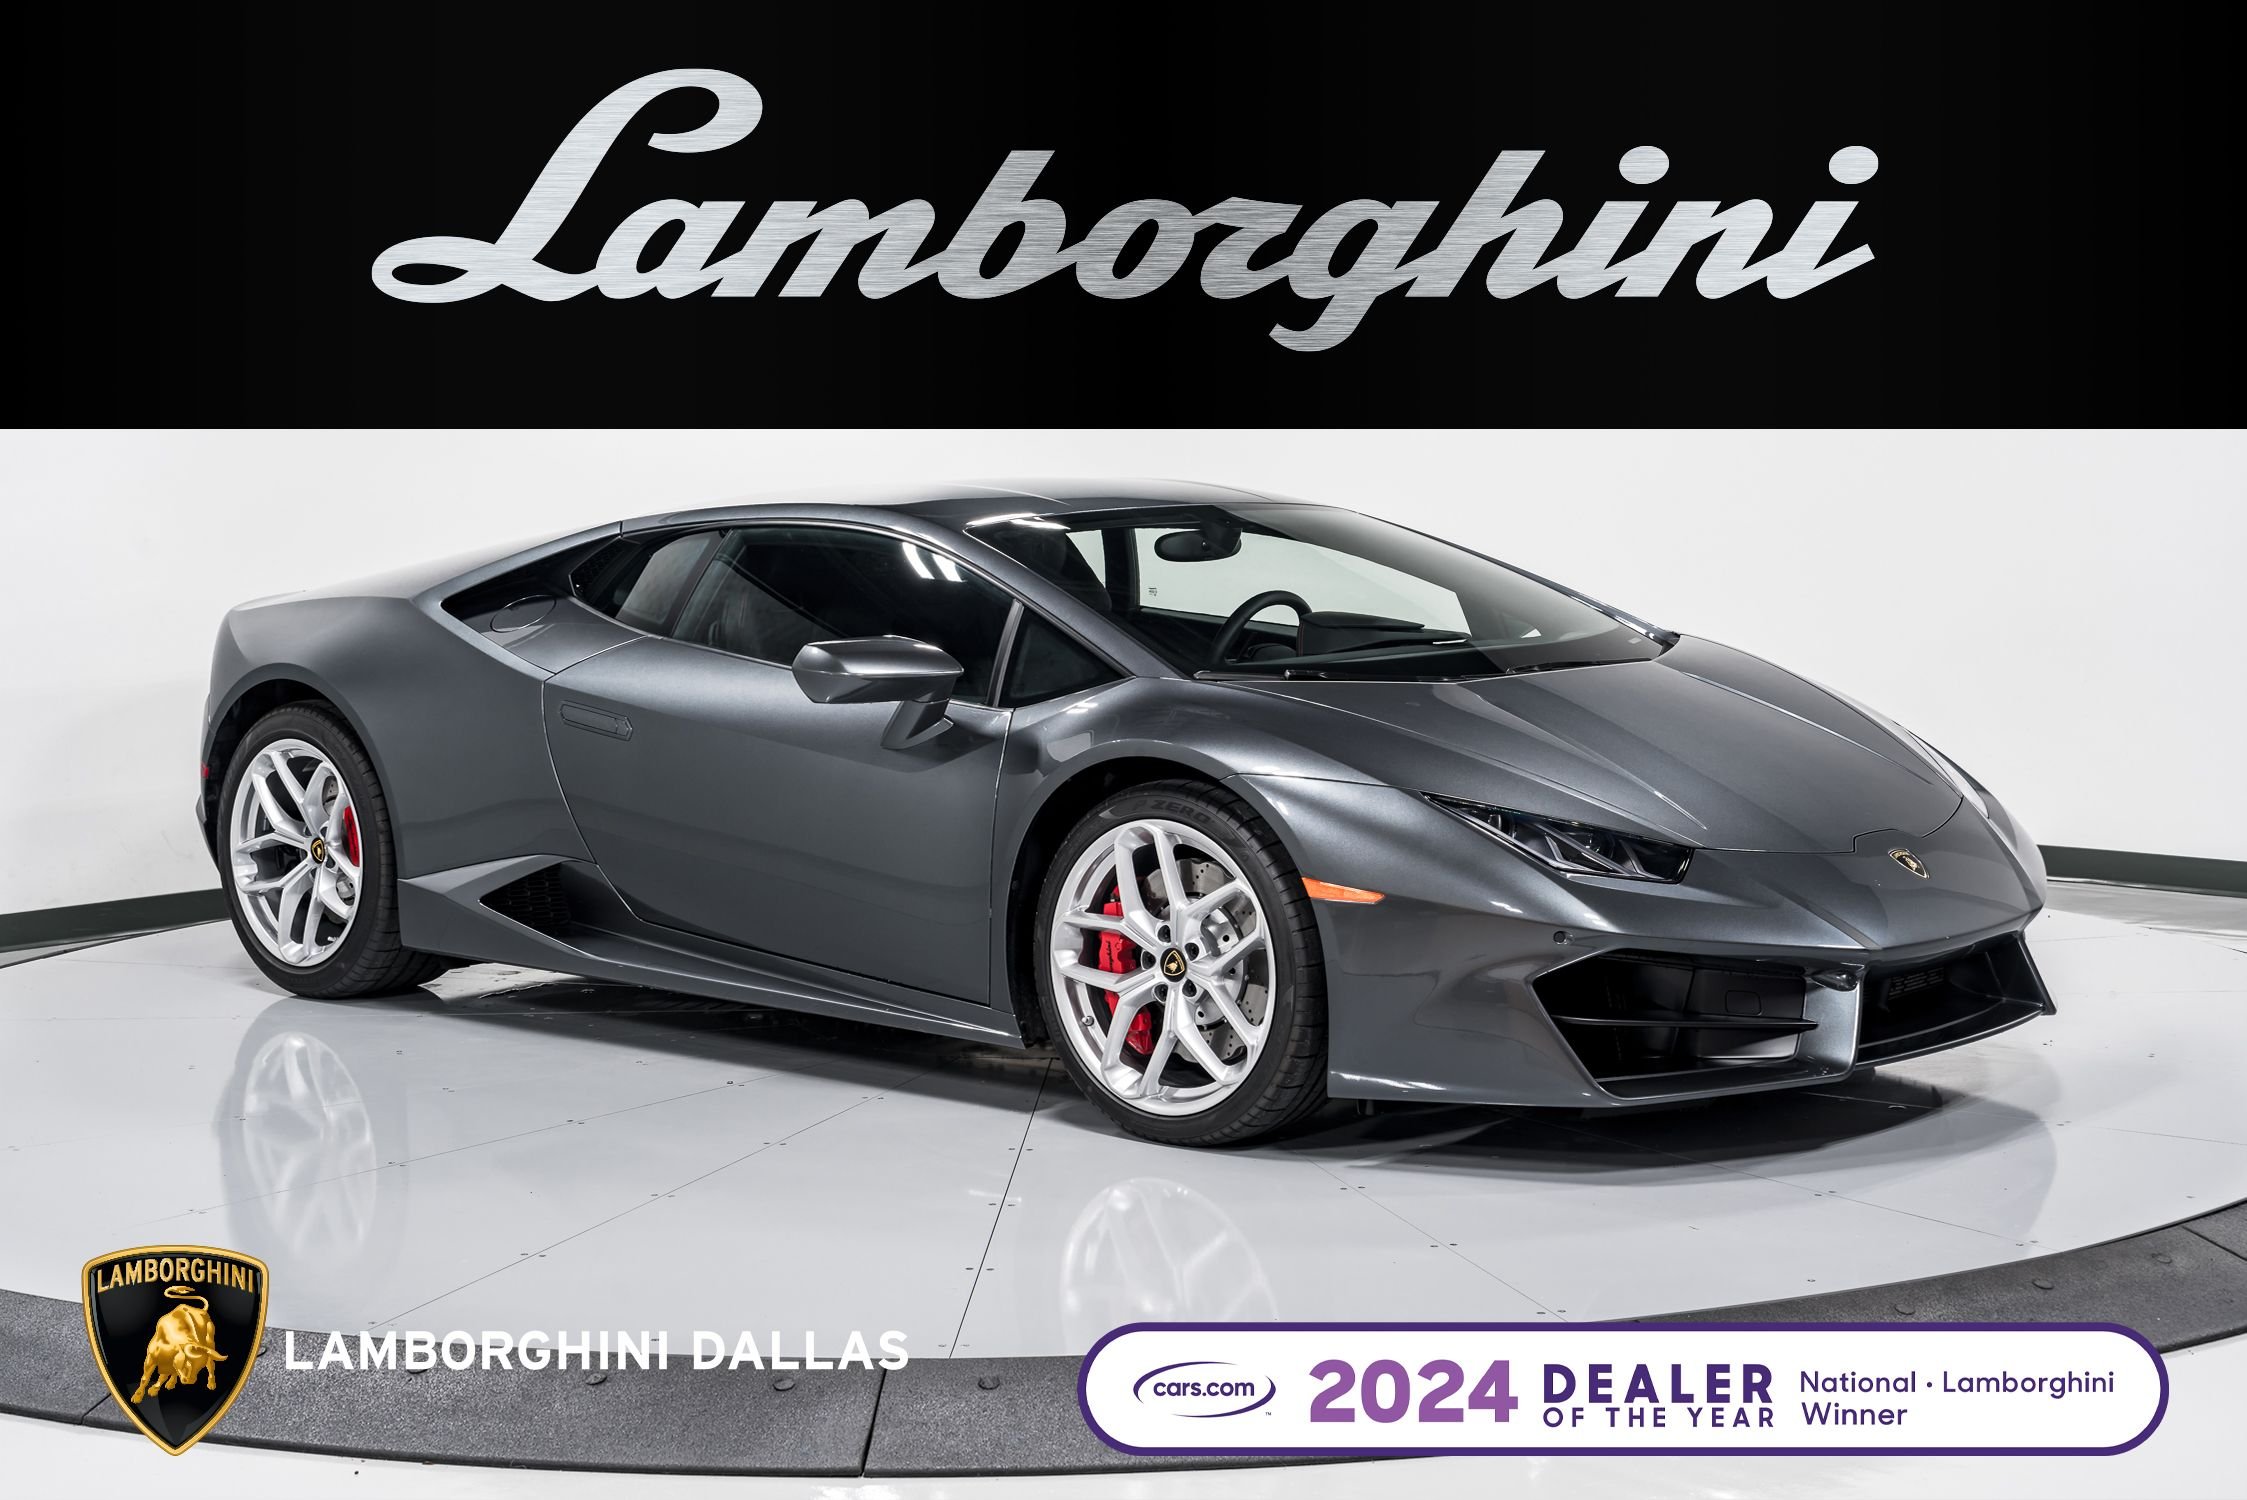 2018 Lamborghini Huracan LP580-2, used, $219,999 | VIN 